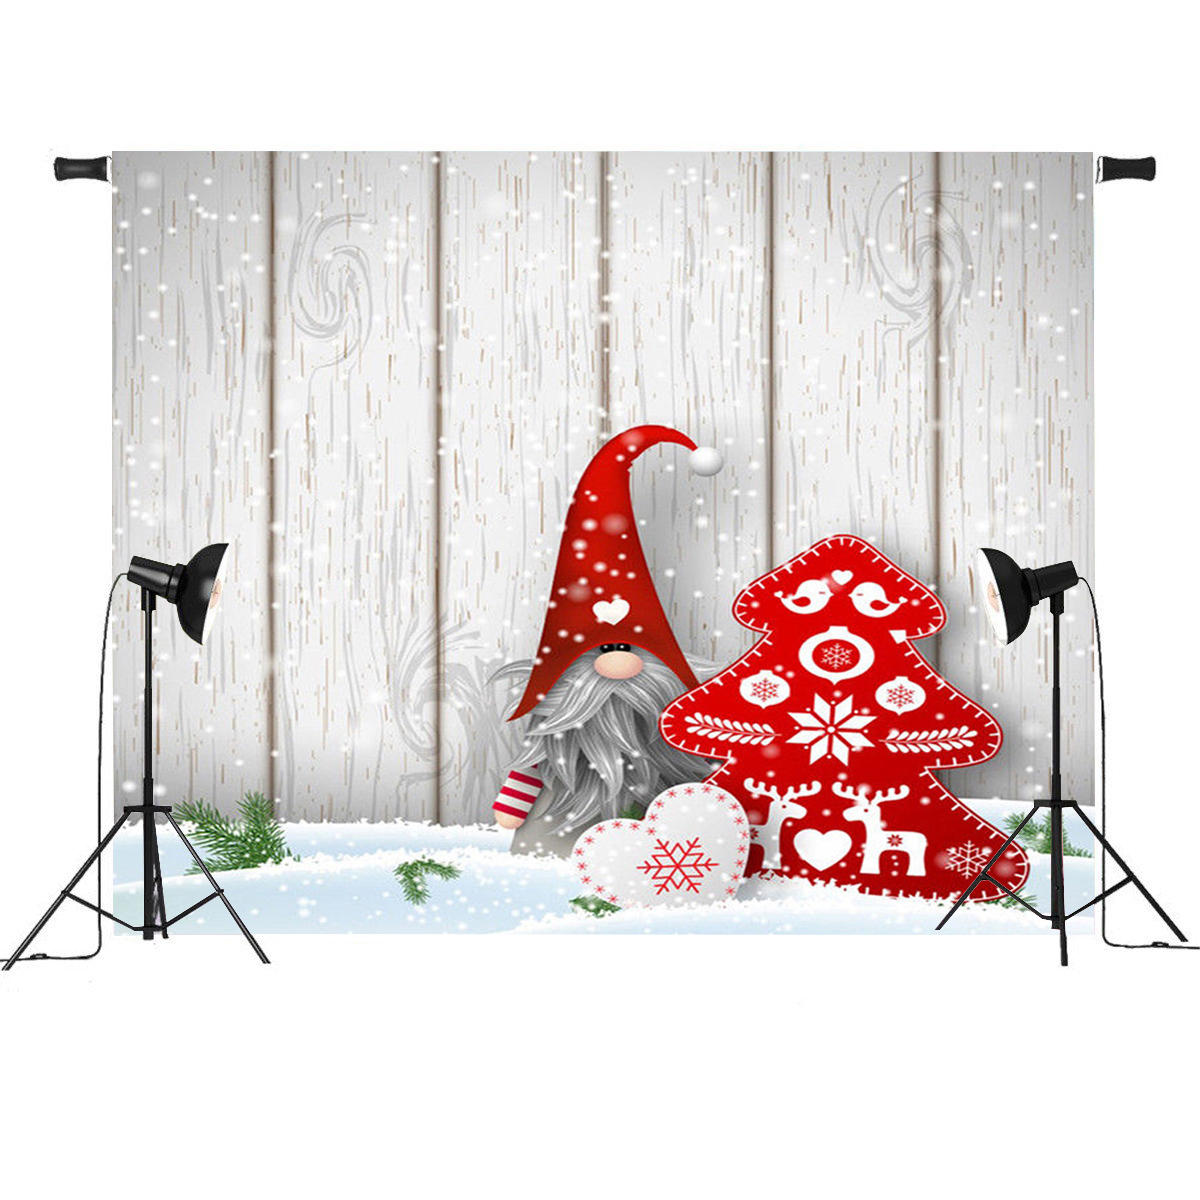 7x5FT Cartoon Santa Claus Christmas Wooden Board Photography Backdrop Studio Prop Background